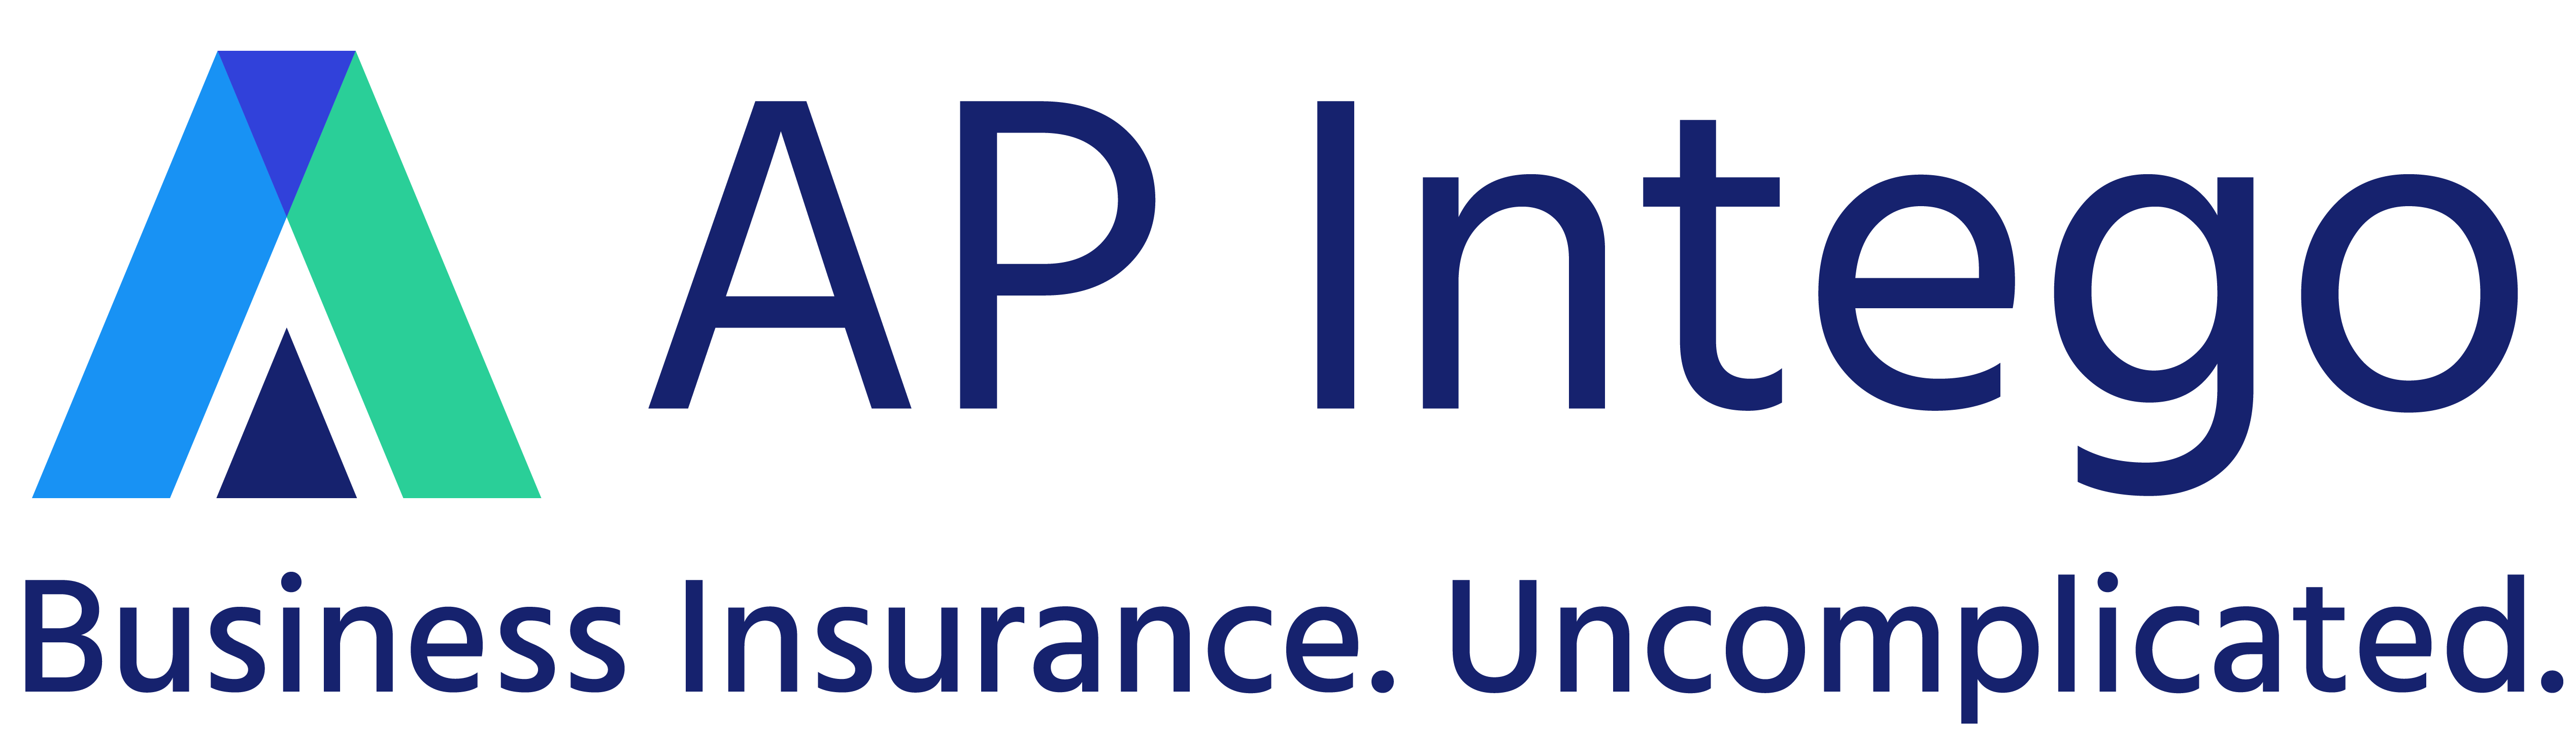 AP Intego Logo with tagline.png